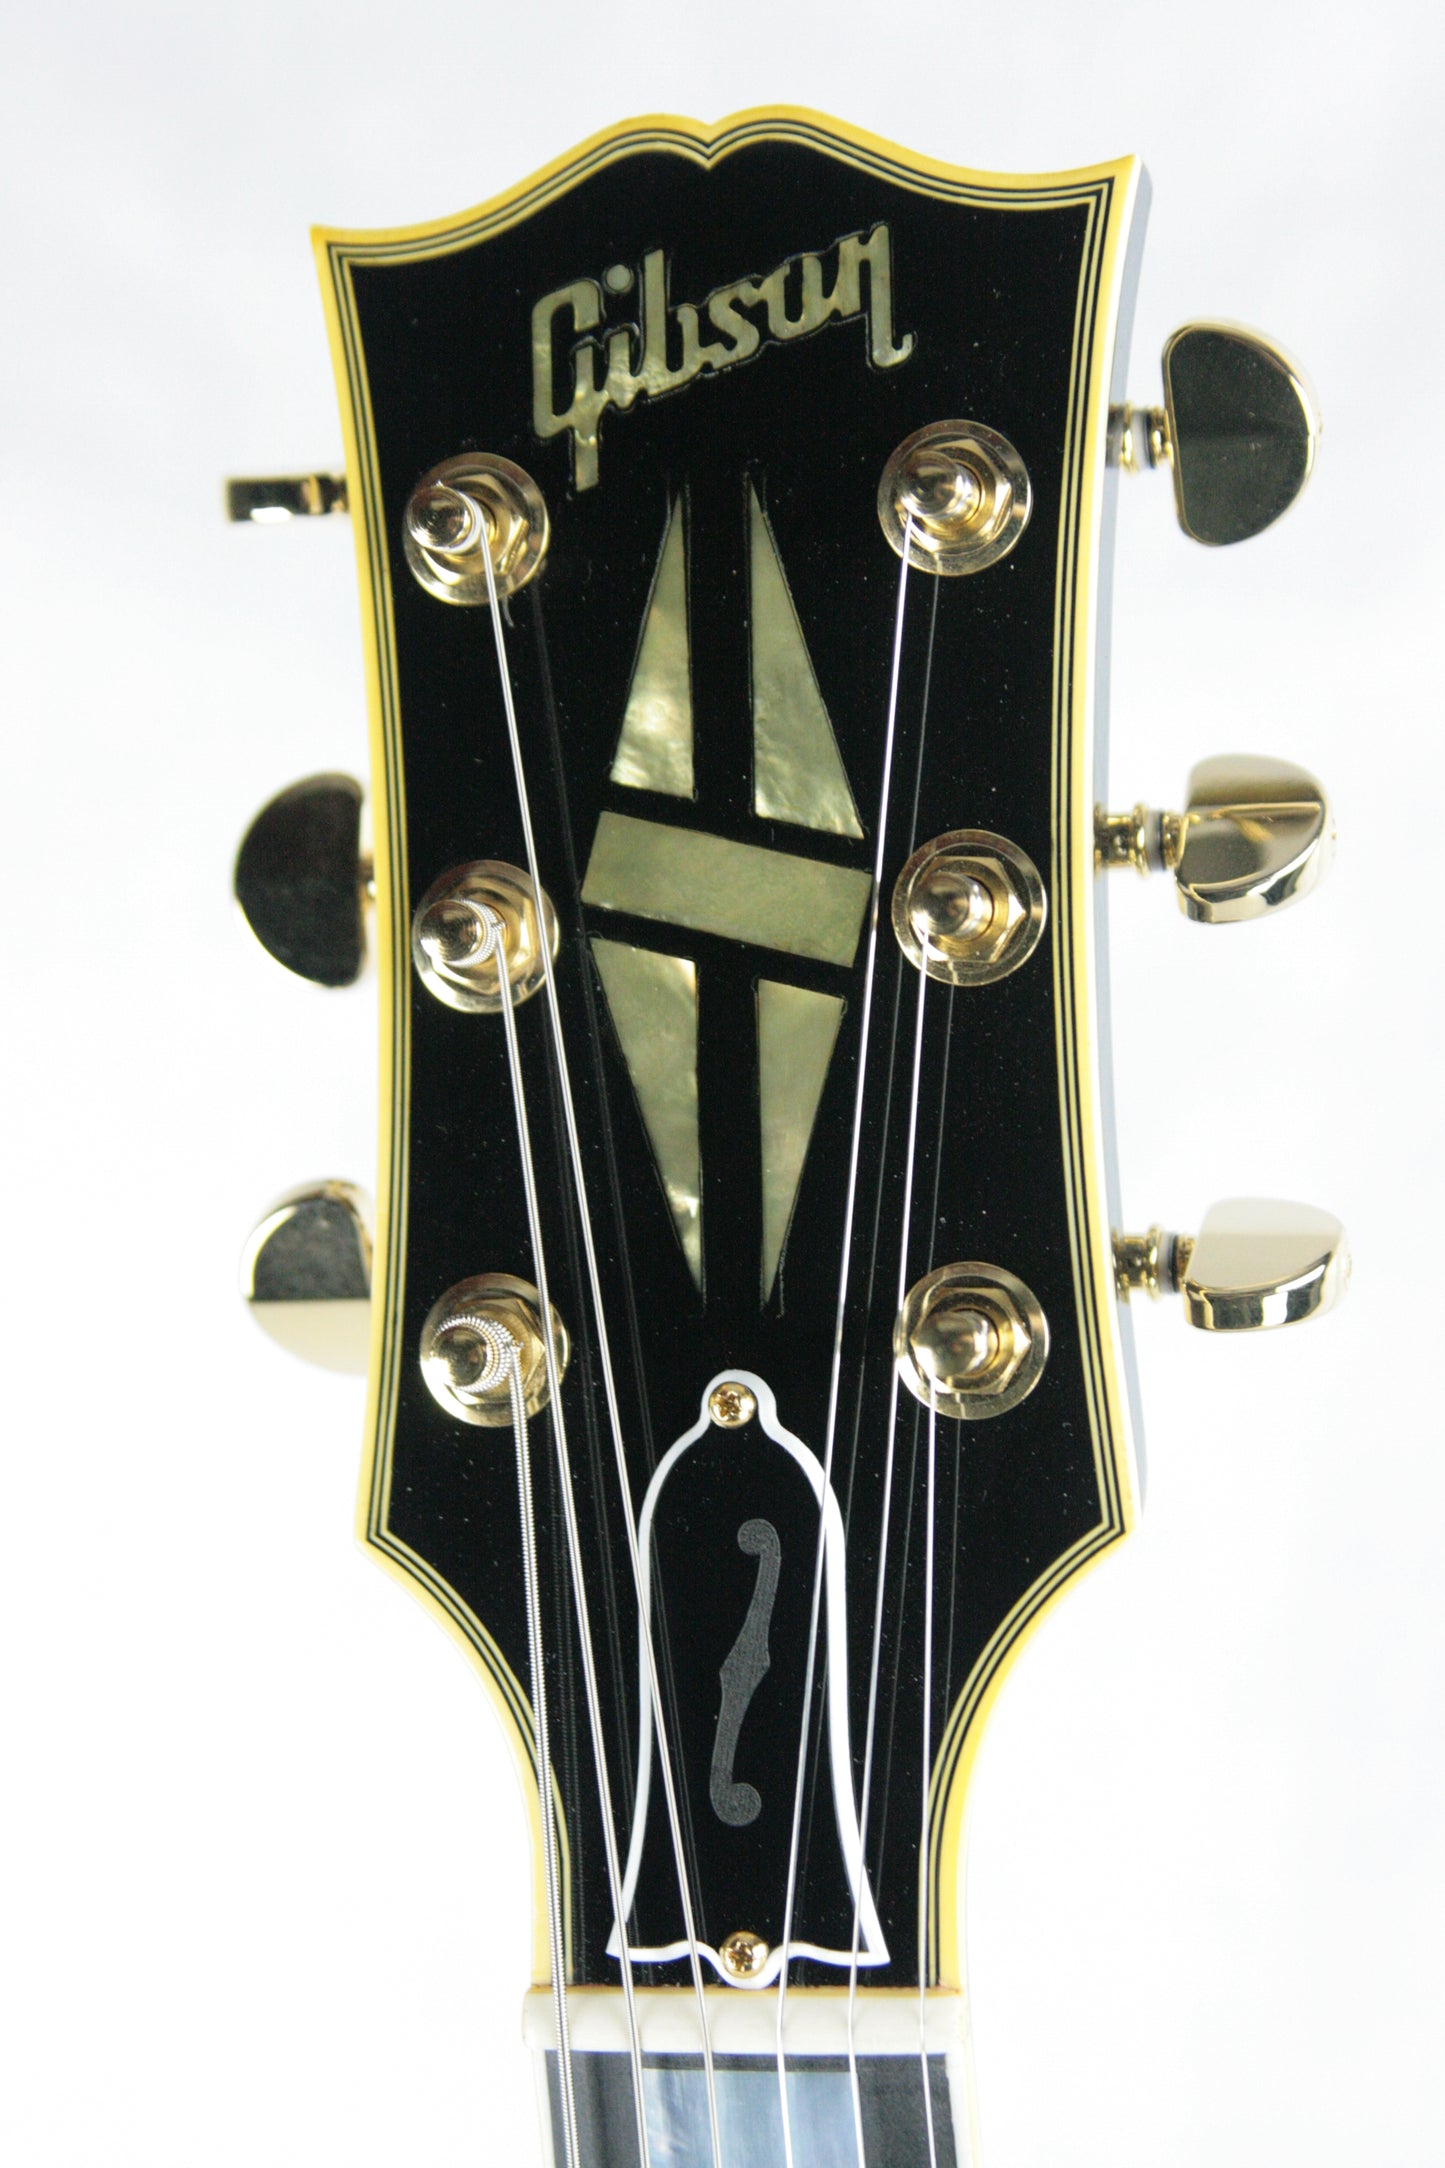 2017 Gibson ES-275 Montreux Burst Les Paul Custom Inlays! Jazz Archtop! 335 355